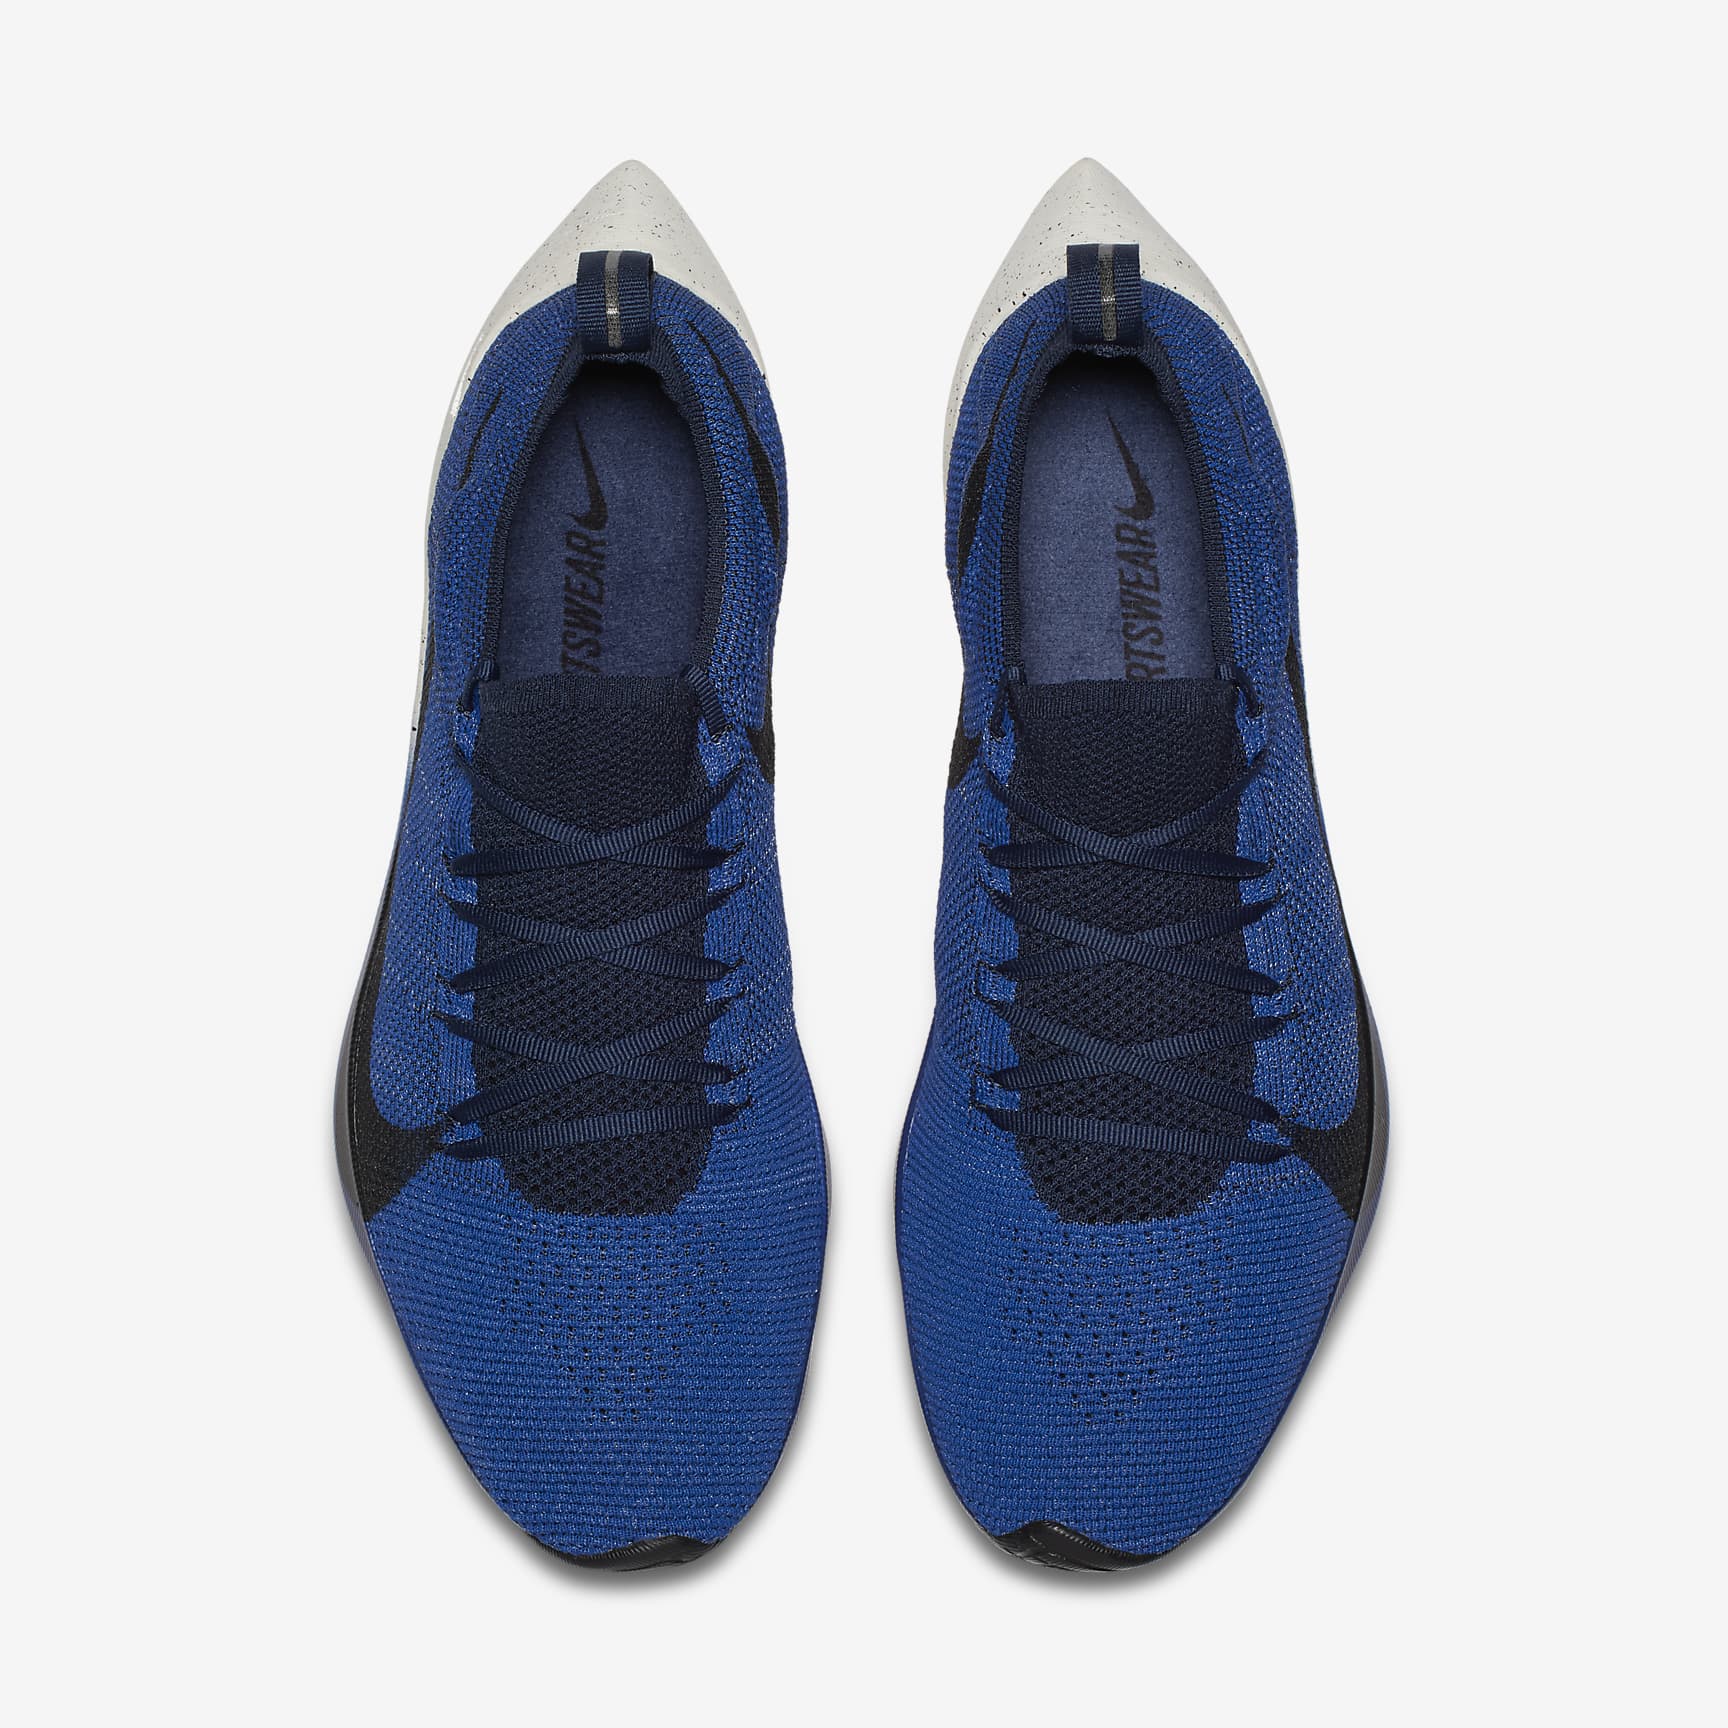 Nike React Vapor Street Flyknit Men's Shoe - Deep Royal/College Navy/Sail/Black